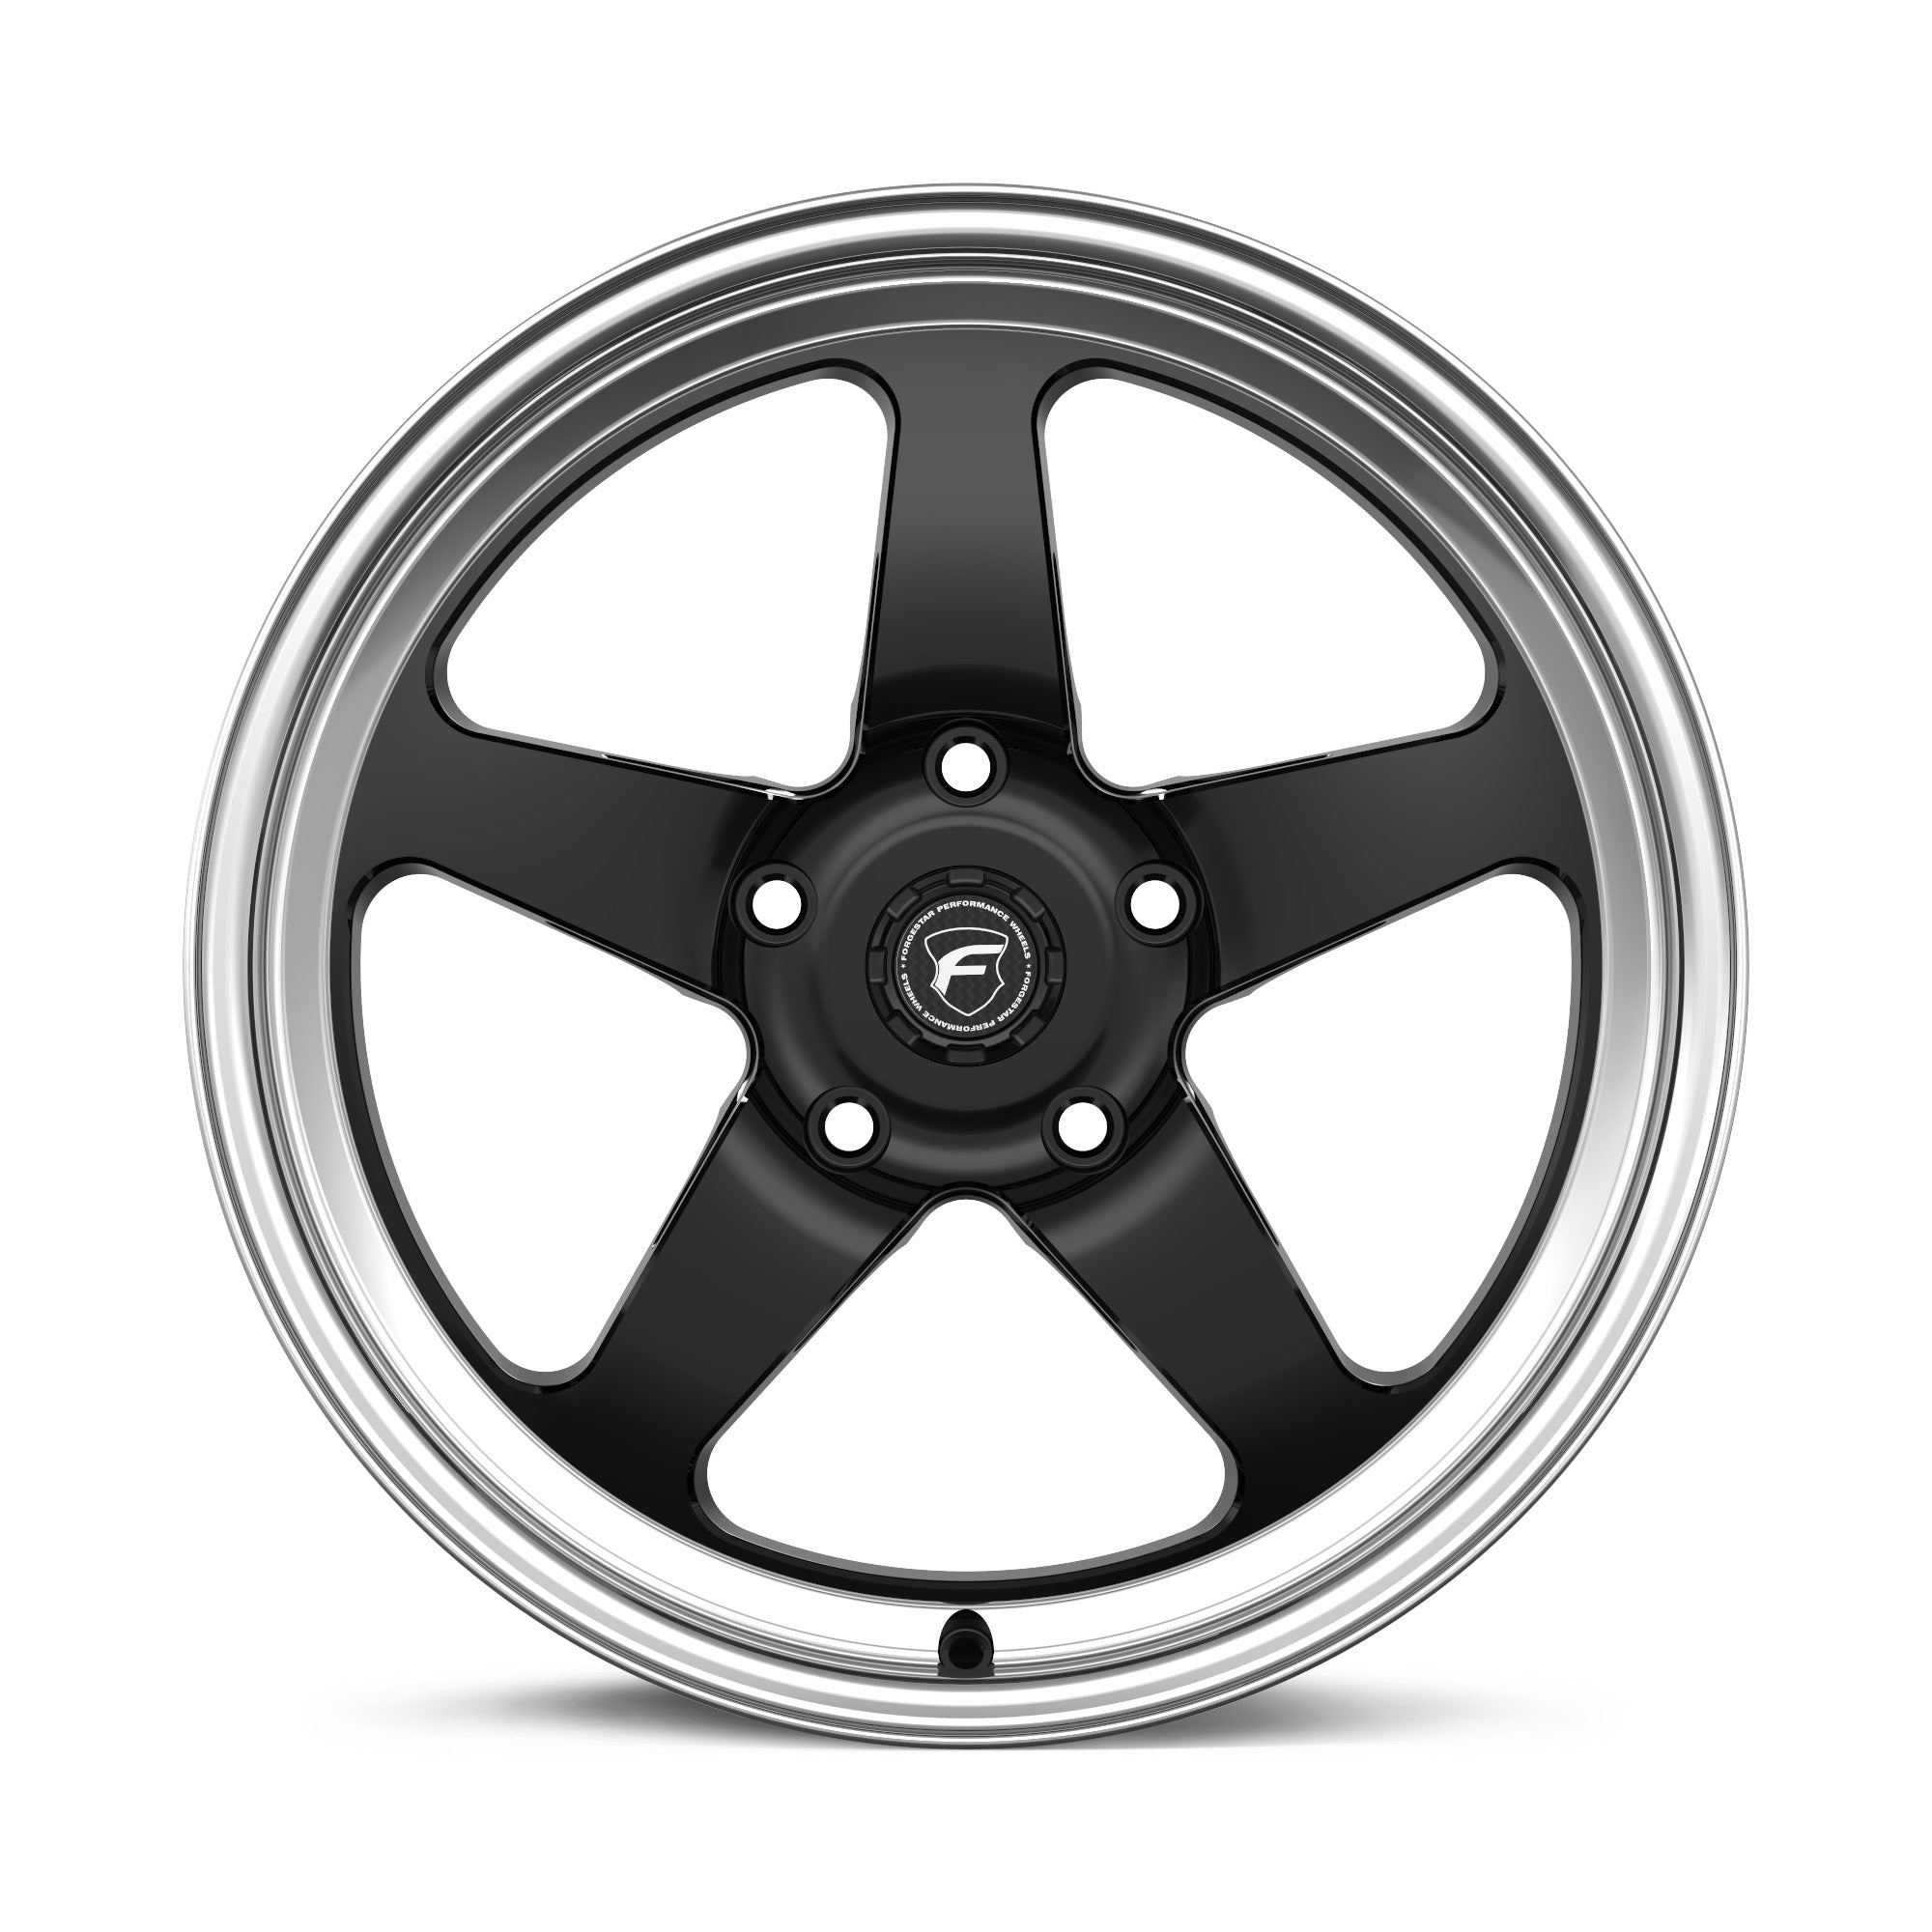 Forgestar D5 Drag Racing Wheels - Gloss Black w/Machined Lip - 17x5 - Sold Individually - Motorsports LA